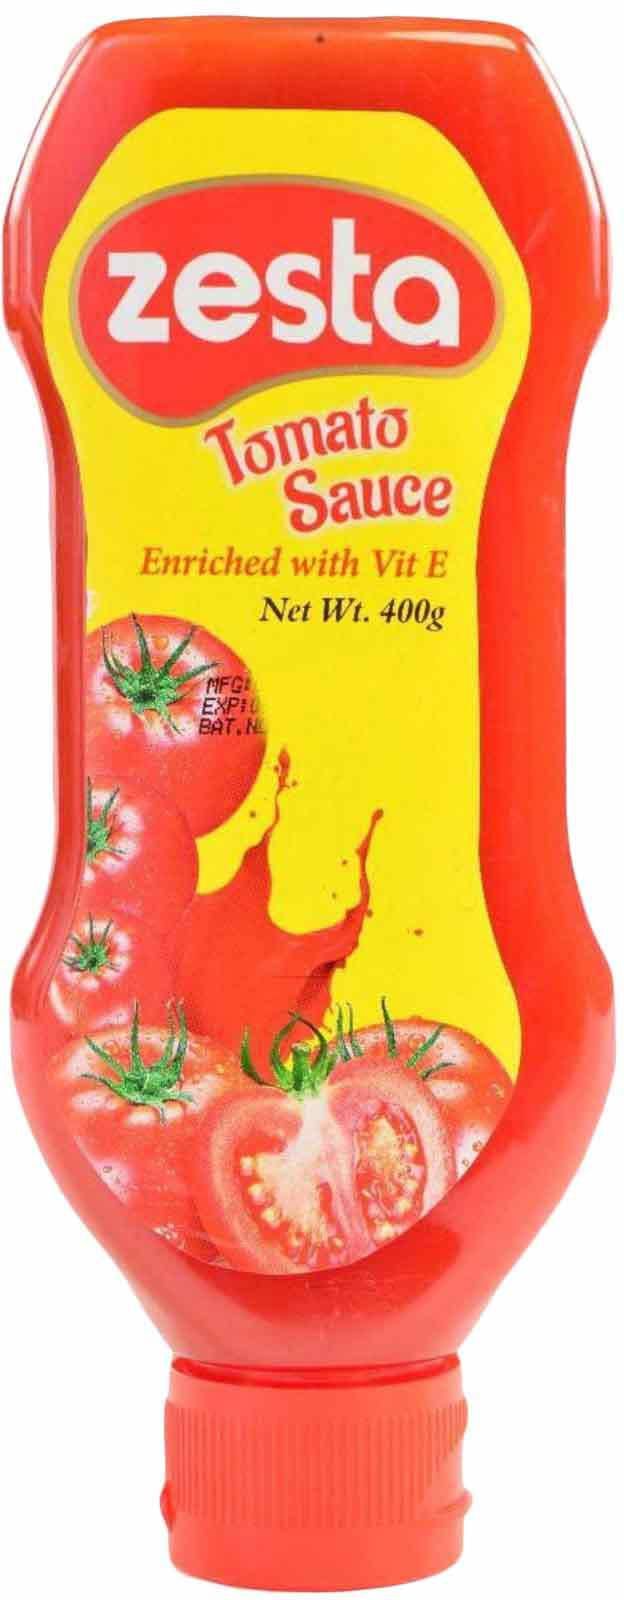 Zesta Tomato Sauce 400g